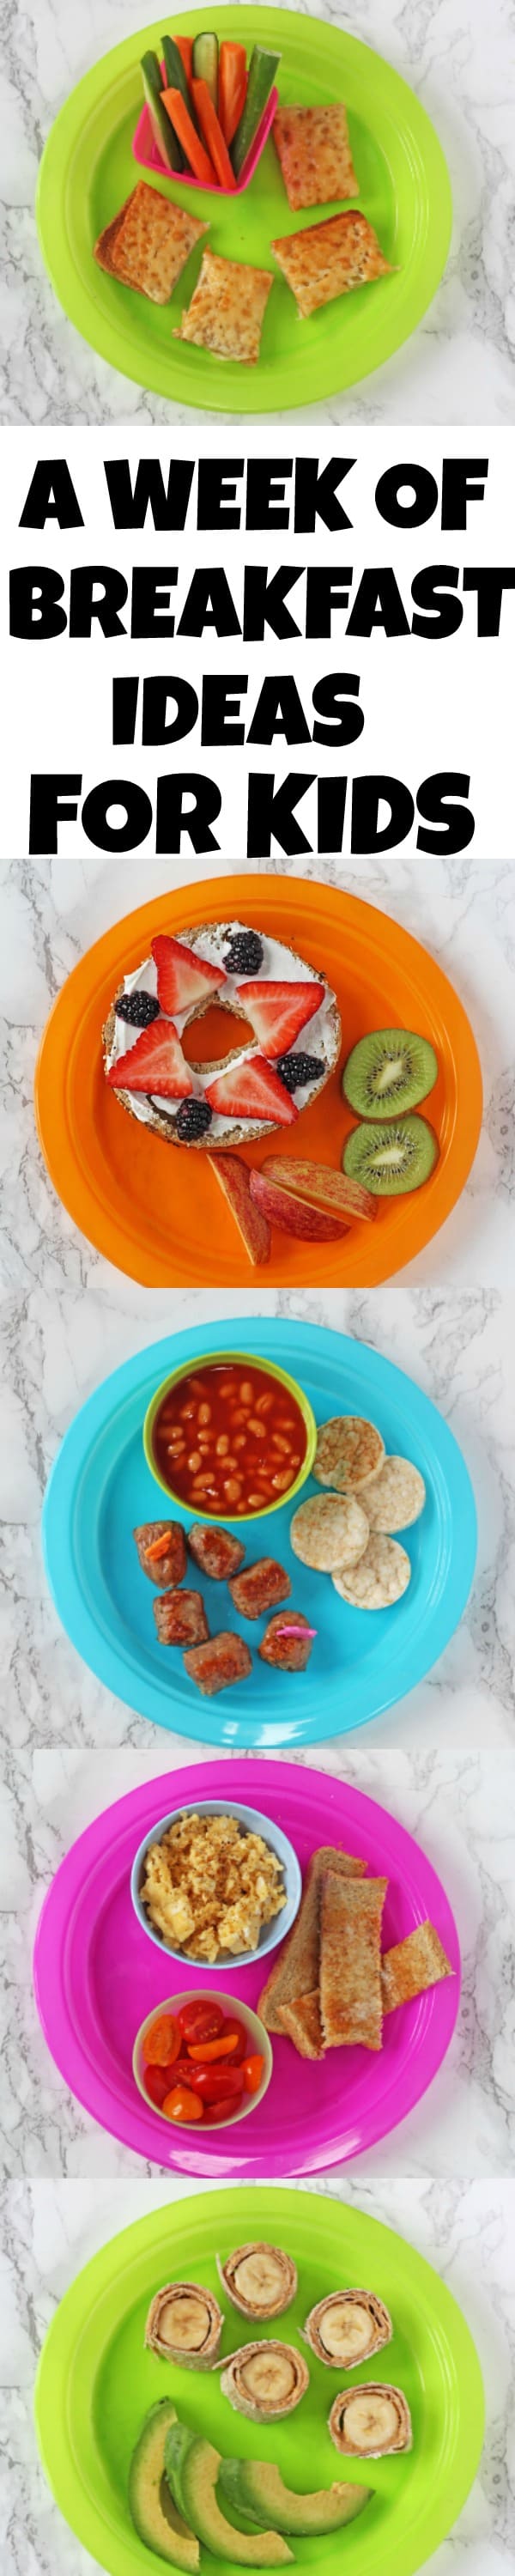 A Week of Breakfast Ideas for Kids - My Fussy Eater | Easy Kids Recipes